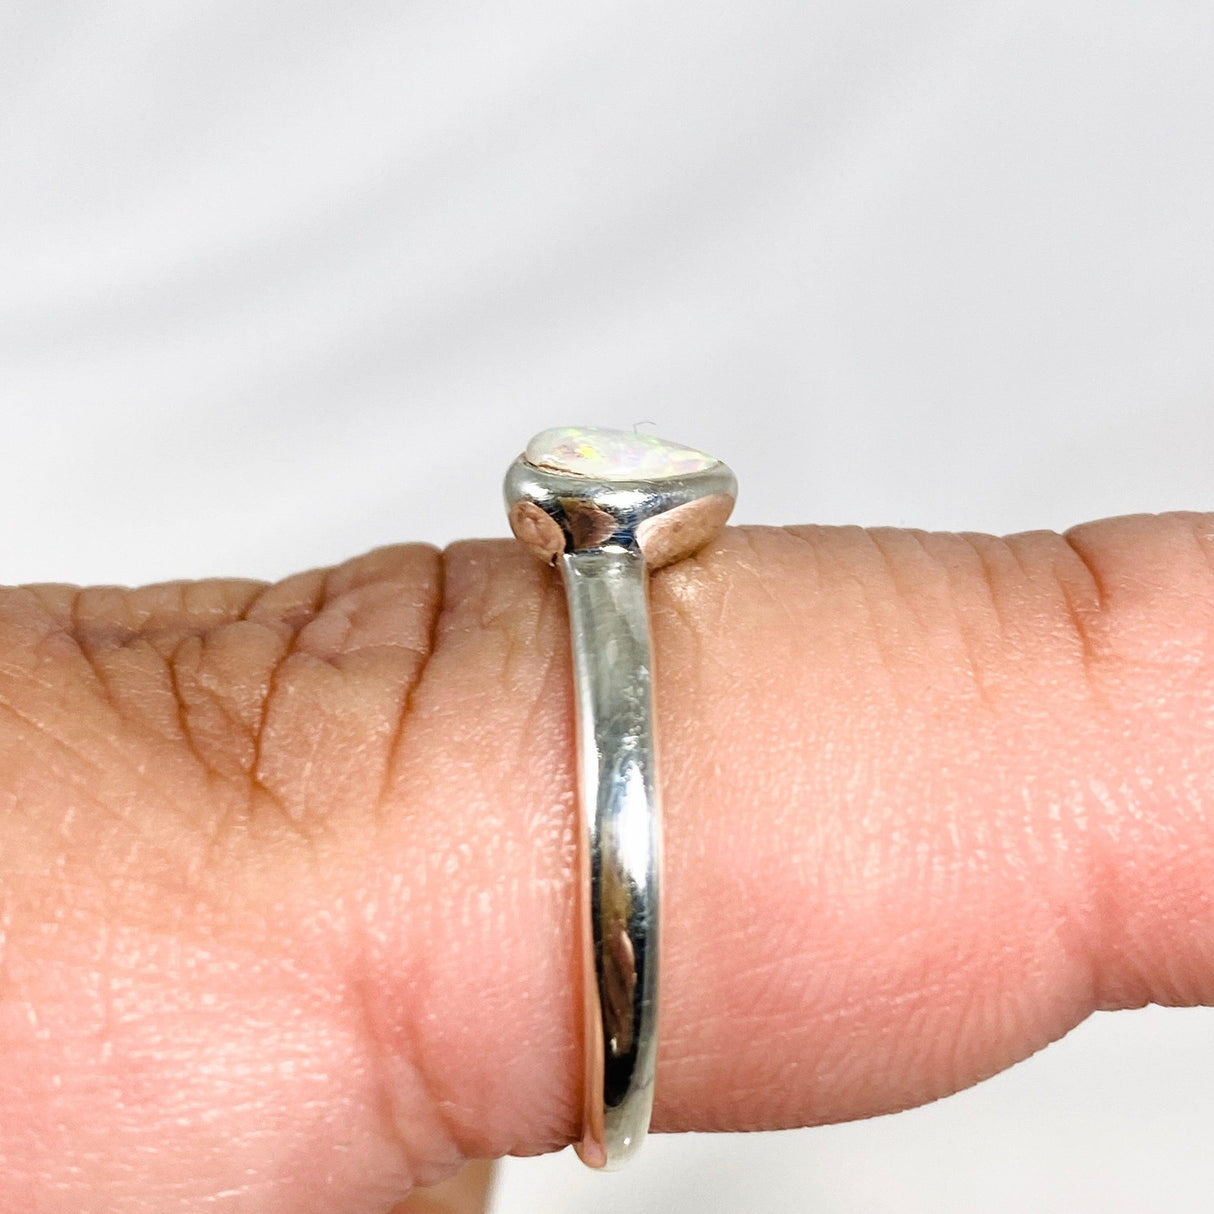 Australian Opal (Solid) Teardrop Ring Size 8 PRGJ339 - Nature's Magick